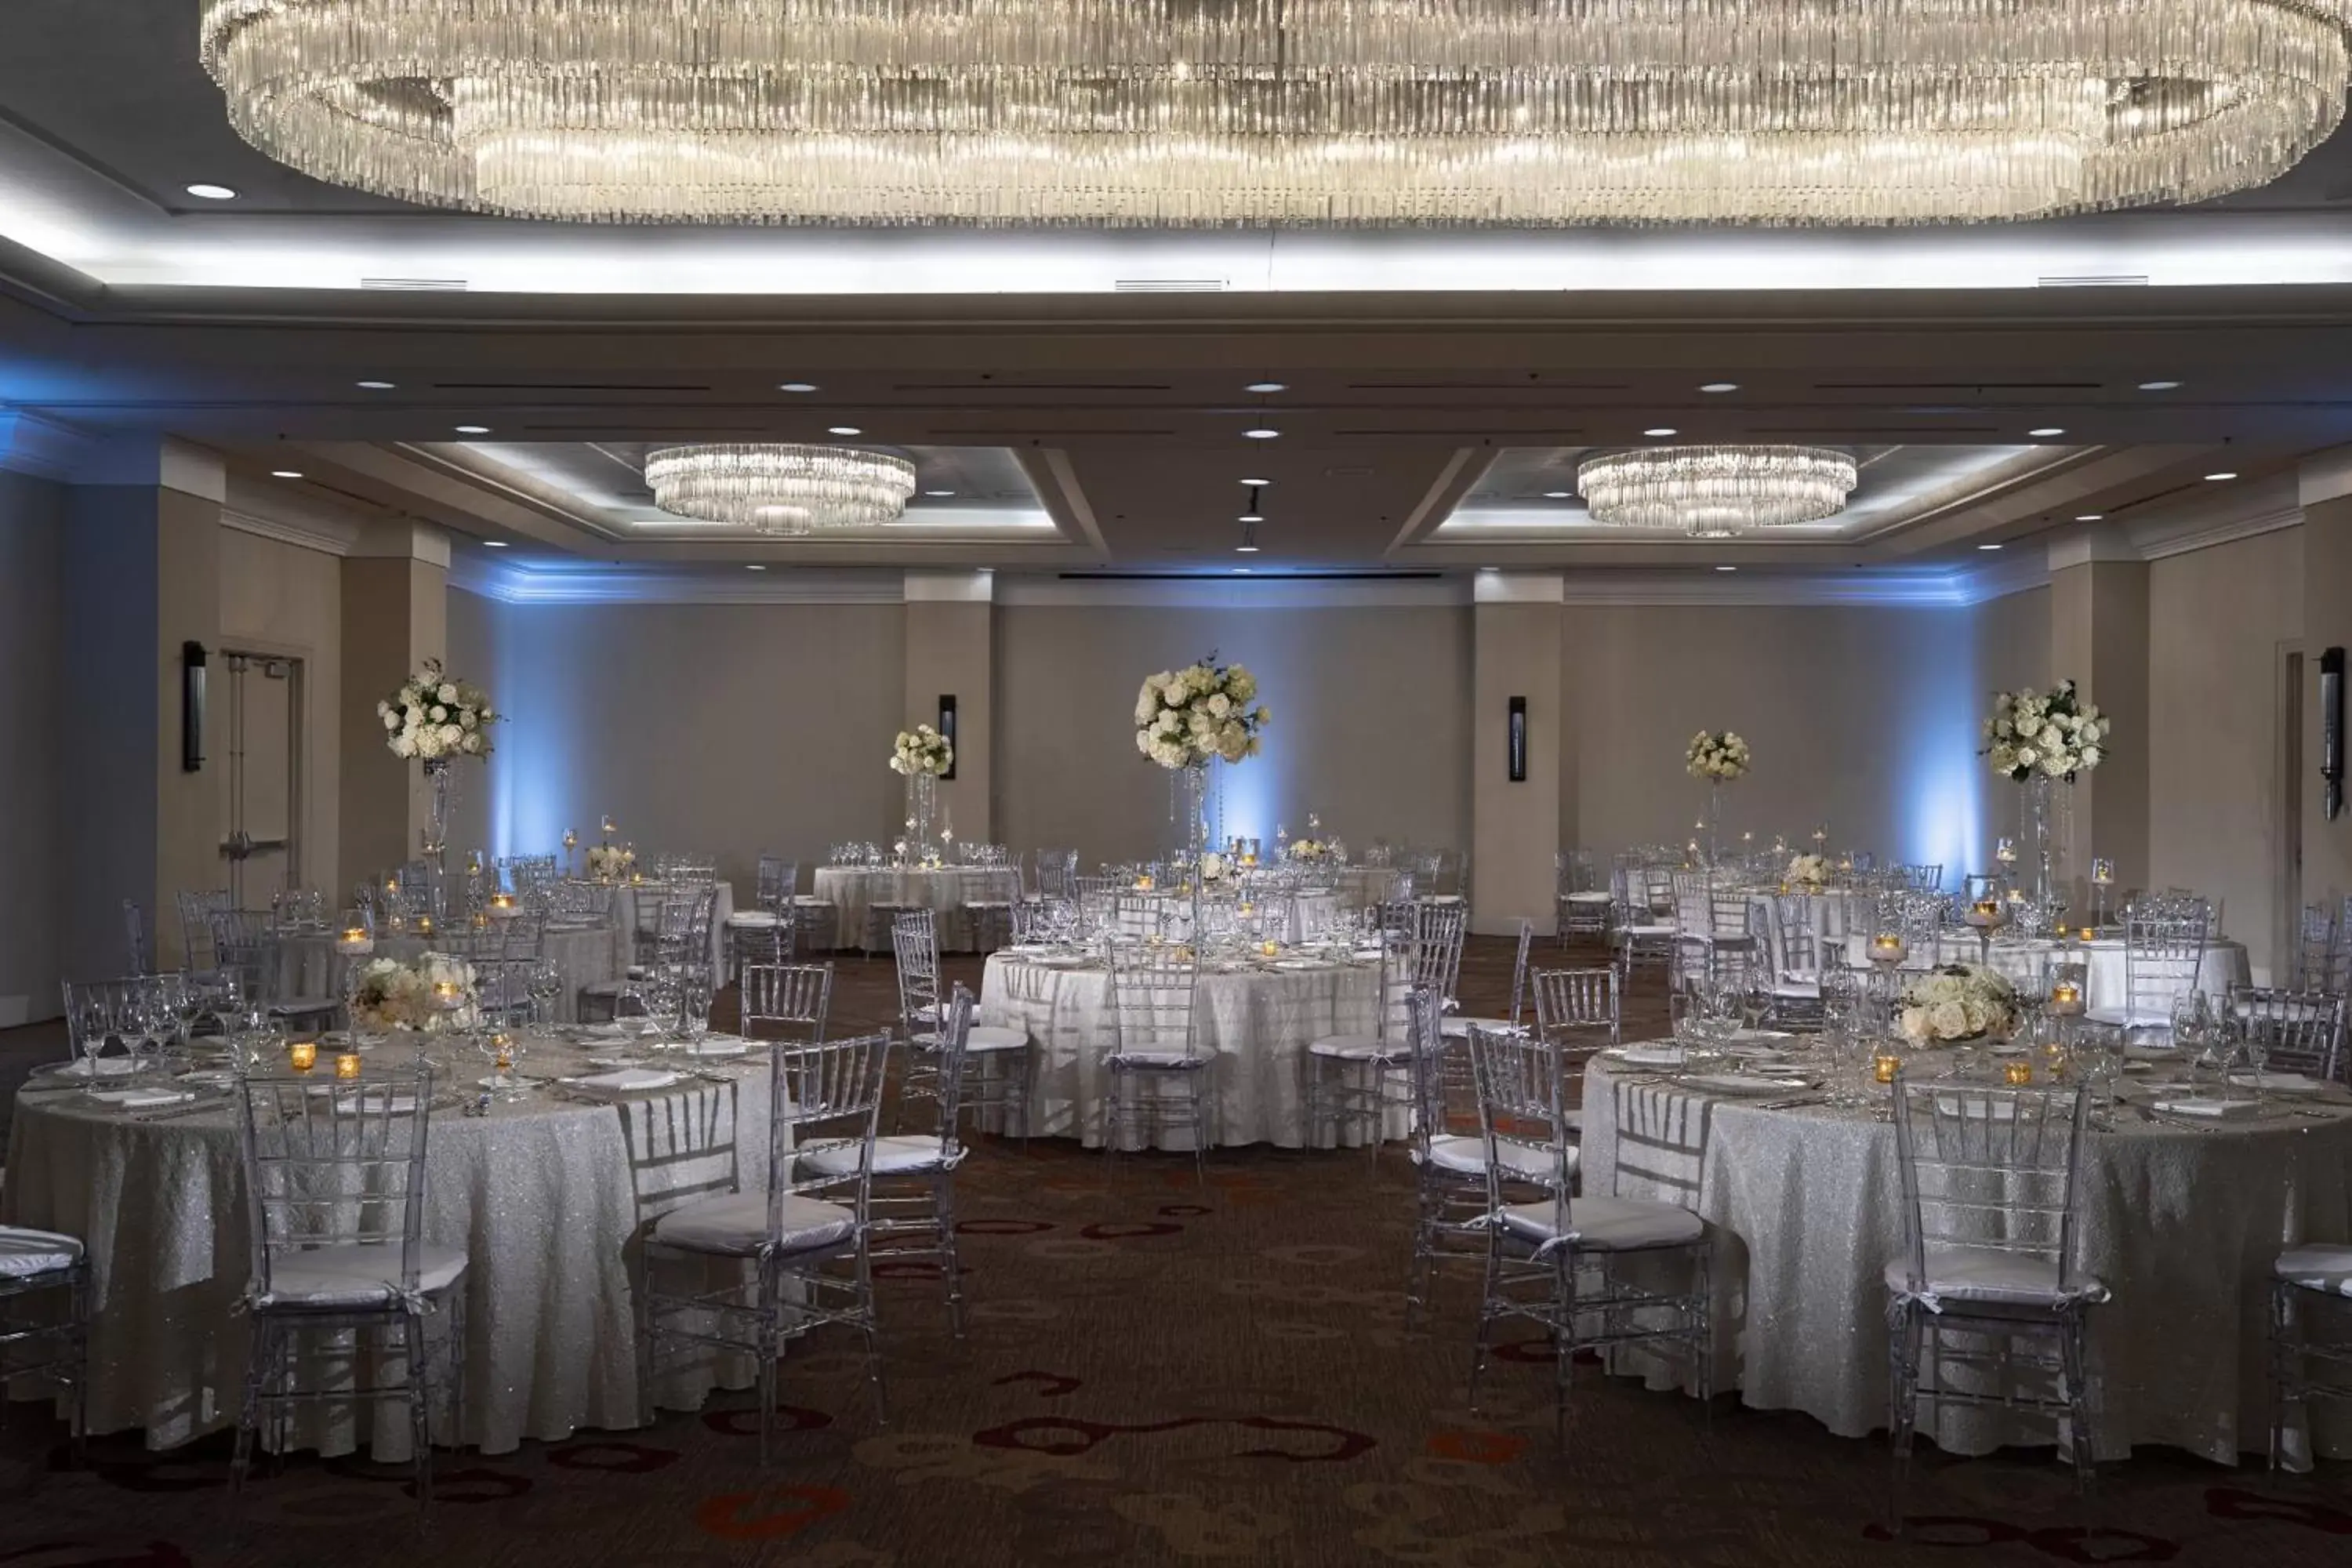 Banquet/Function facilities, Banquet Facilities in The Baronette Renaissance Detroit-Novi Hotel